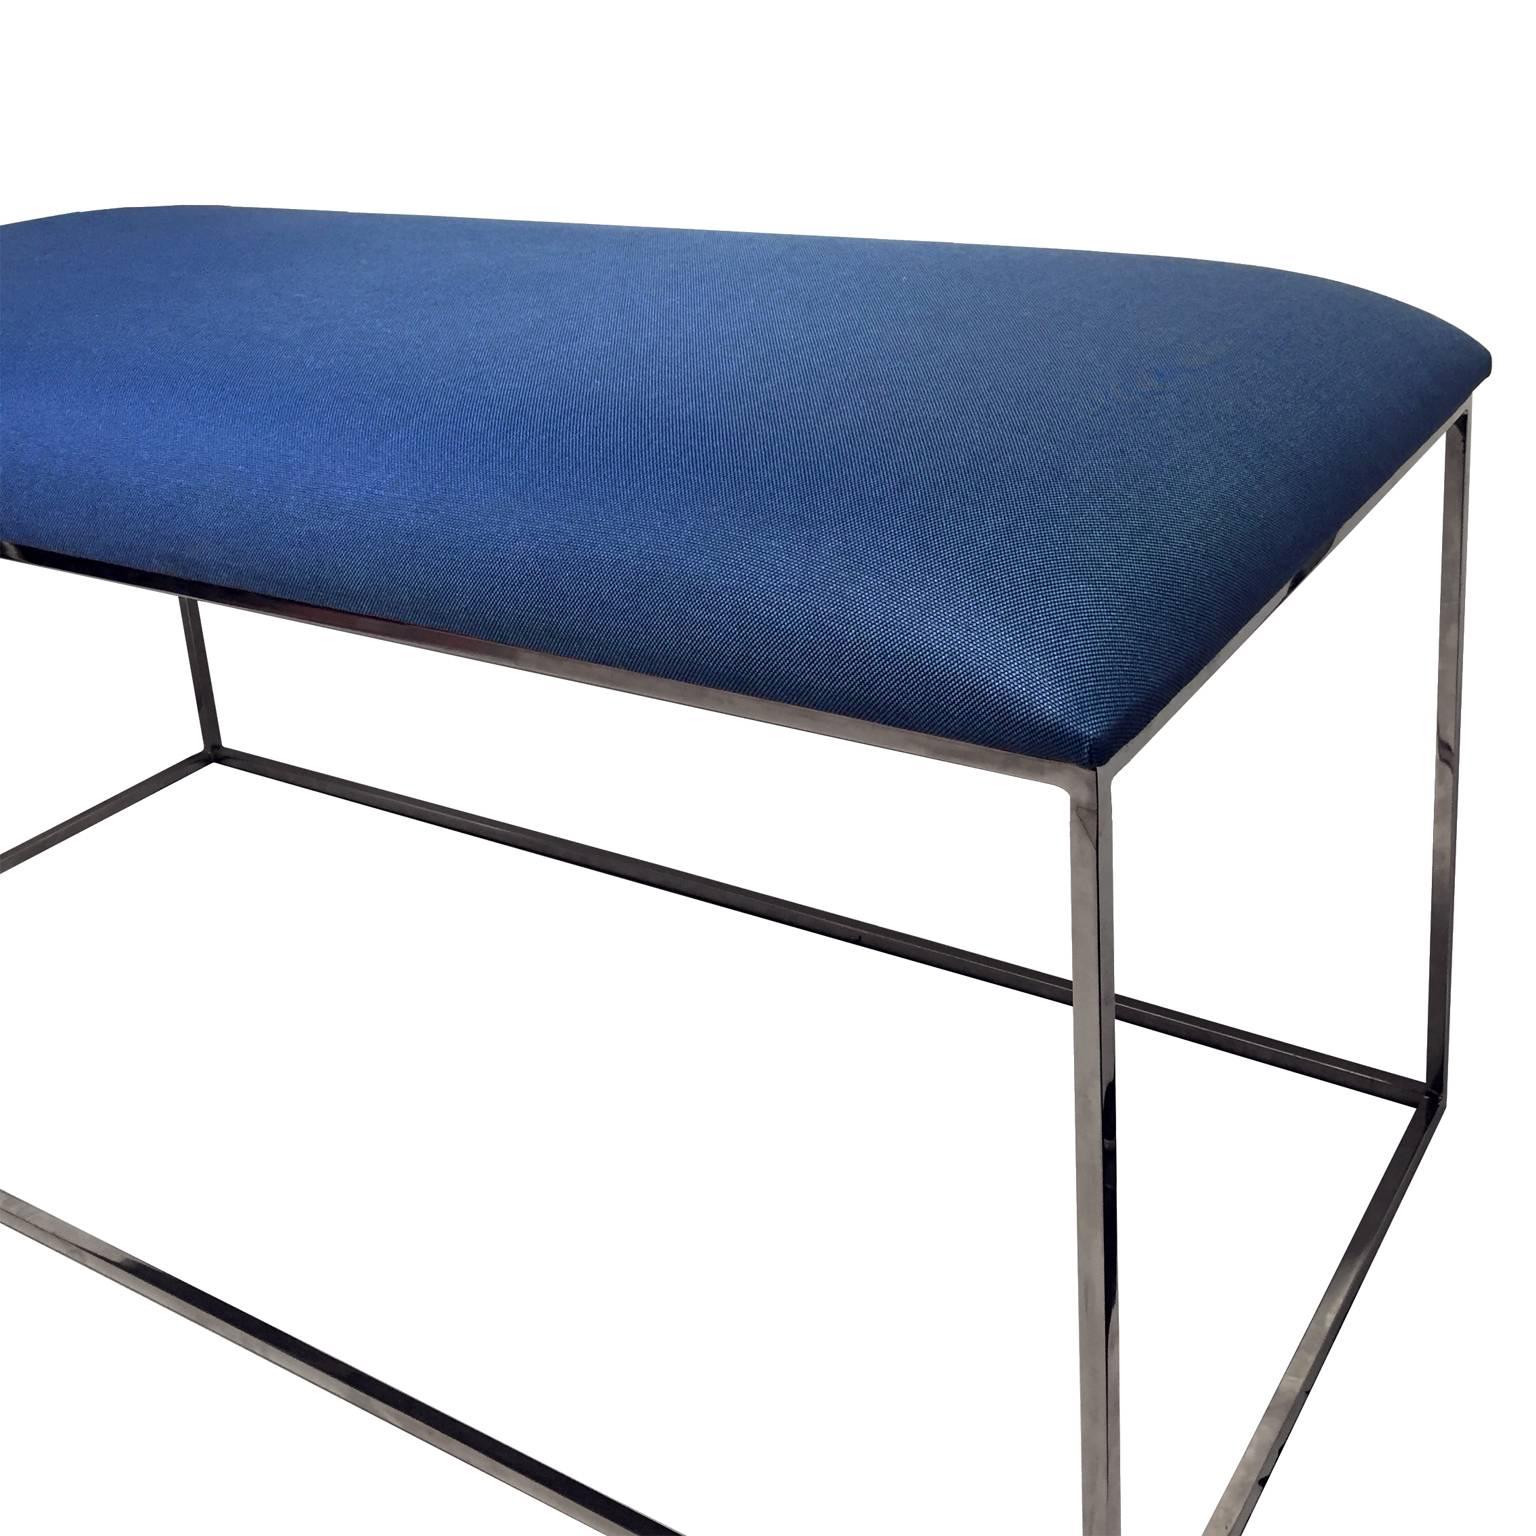 Vintage chrome rectangular base bench with light blue upholstery.